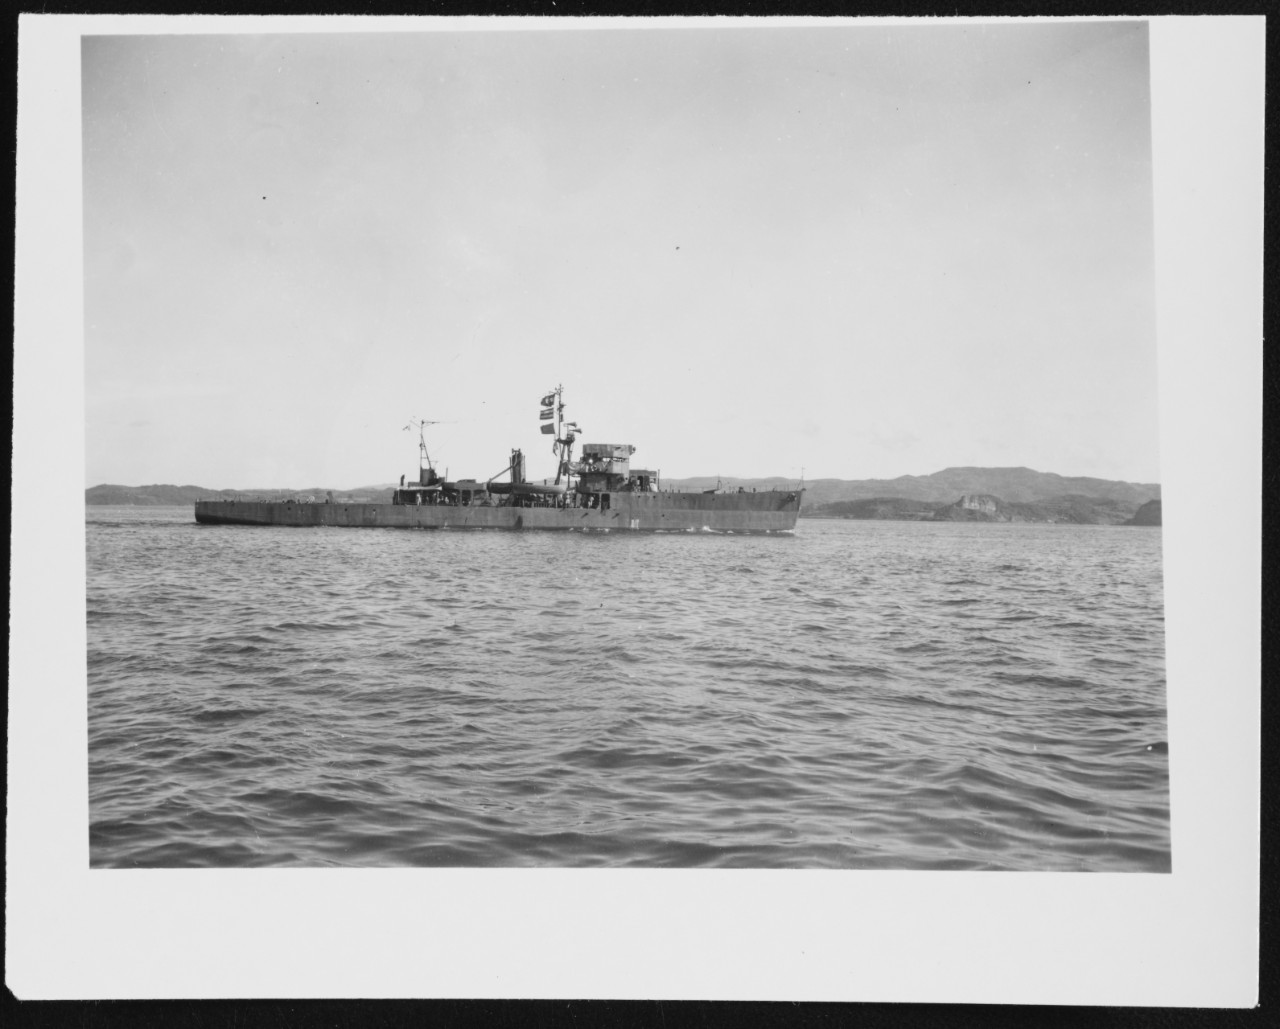 Japanese Escort Vessel: KAIBOKAN #126 (CL II) Type D